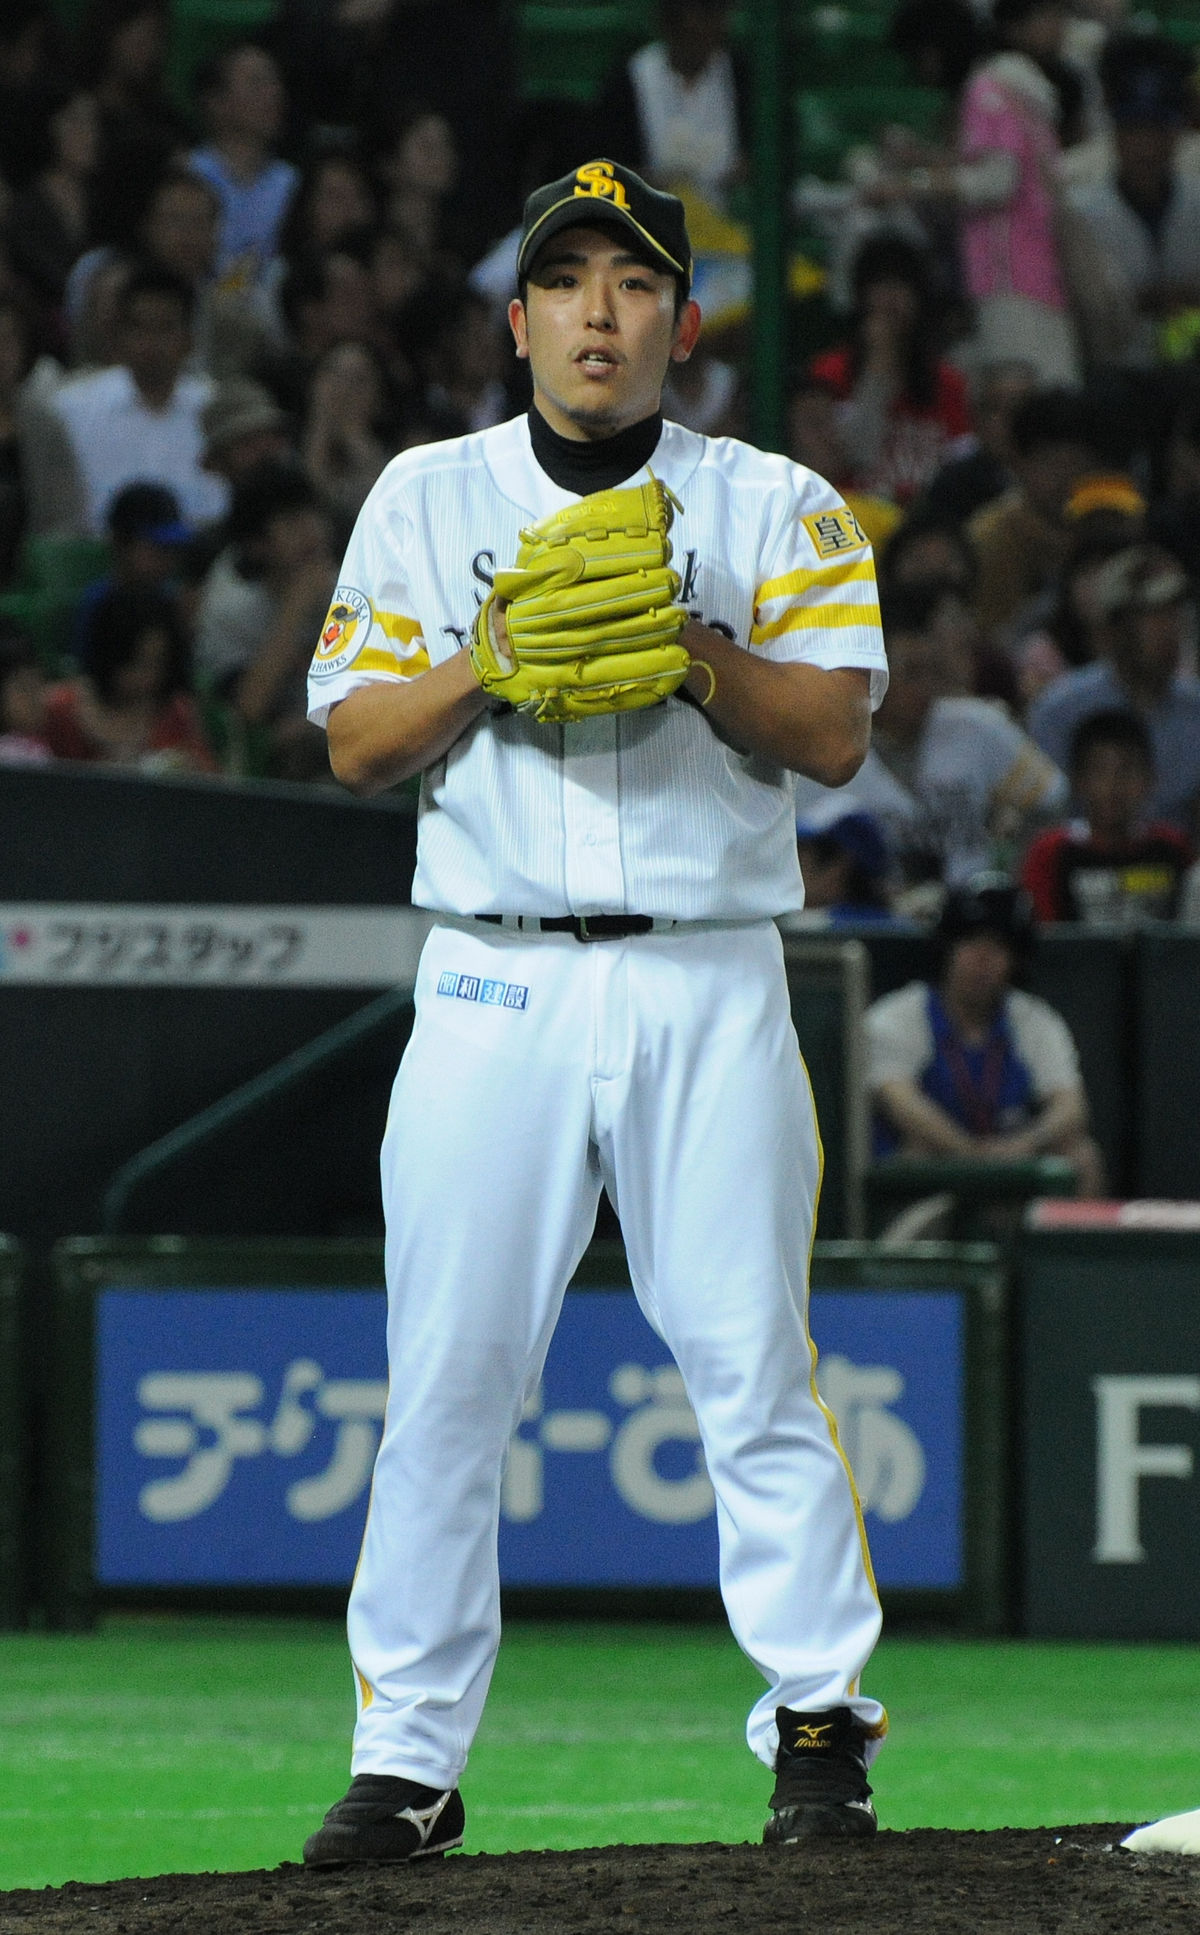 Softbank Hawks Baseball Jersey K. Saitoh 